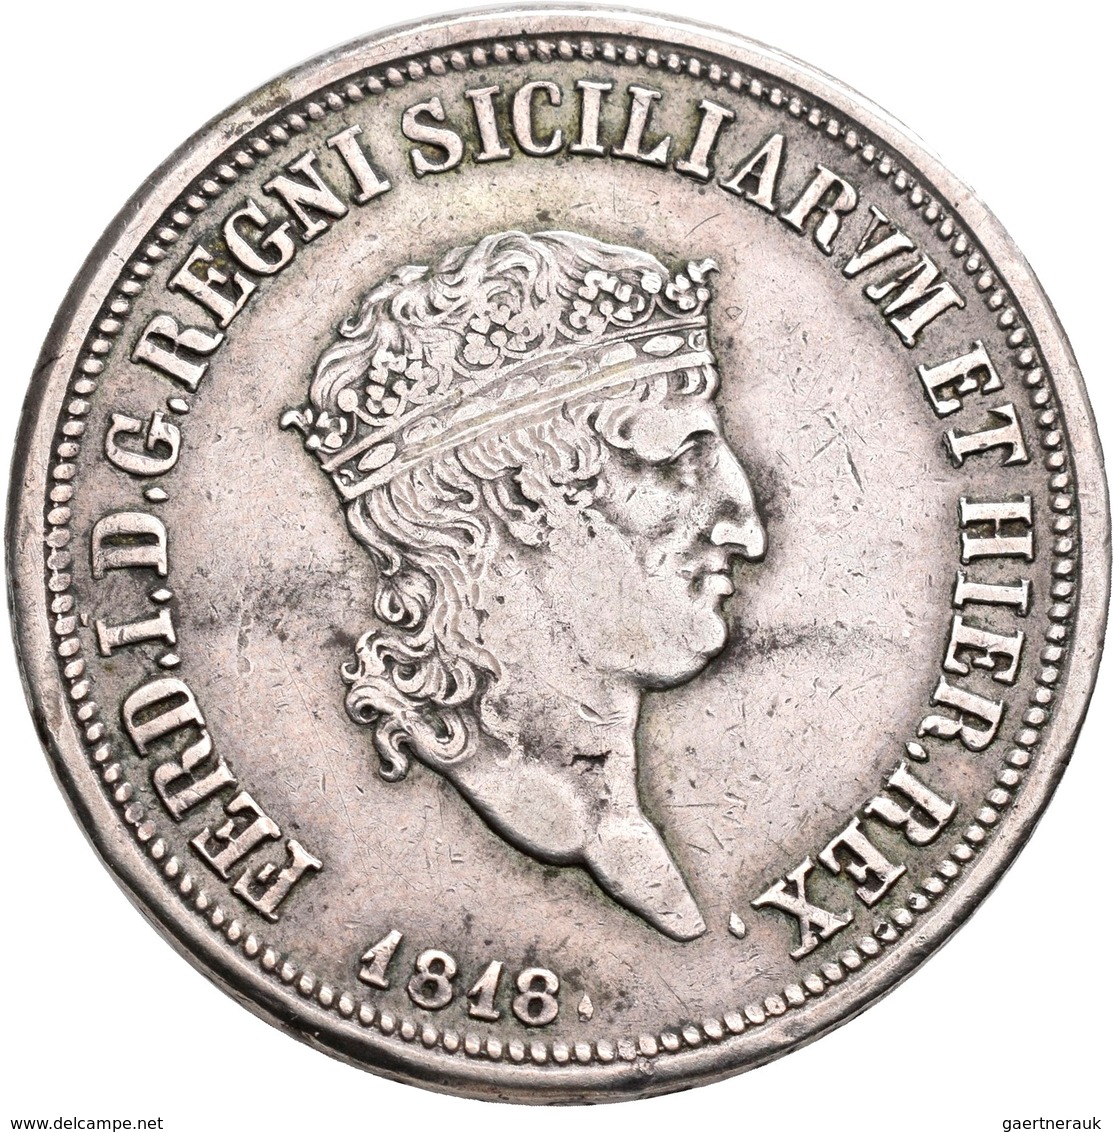 Italien: Königreich Beider Sizilien, Ferdinando I. Di Borbone 1816-1825: Piastra Da 120 Grana 1818, - 1861-1878 : Victor Emmanuel II.